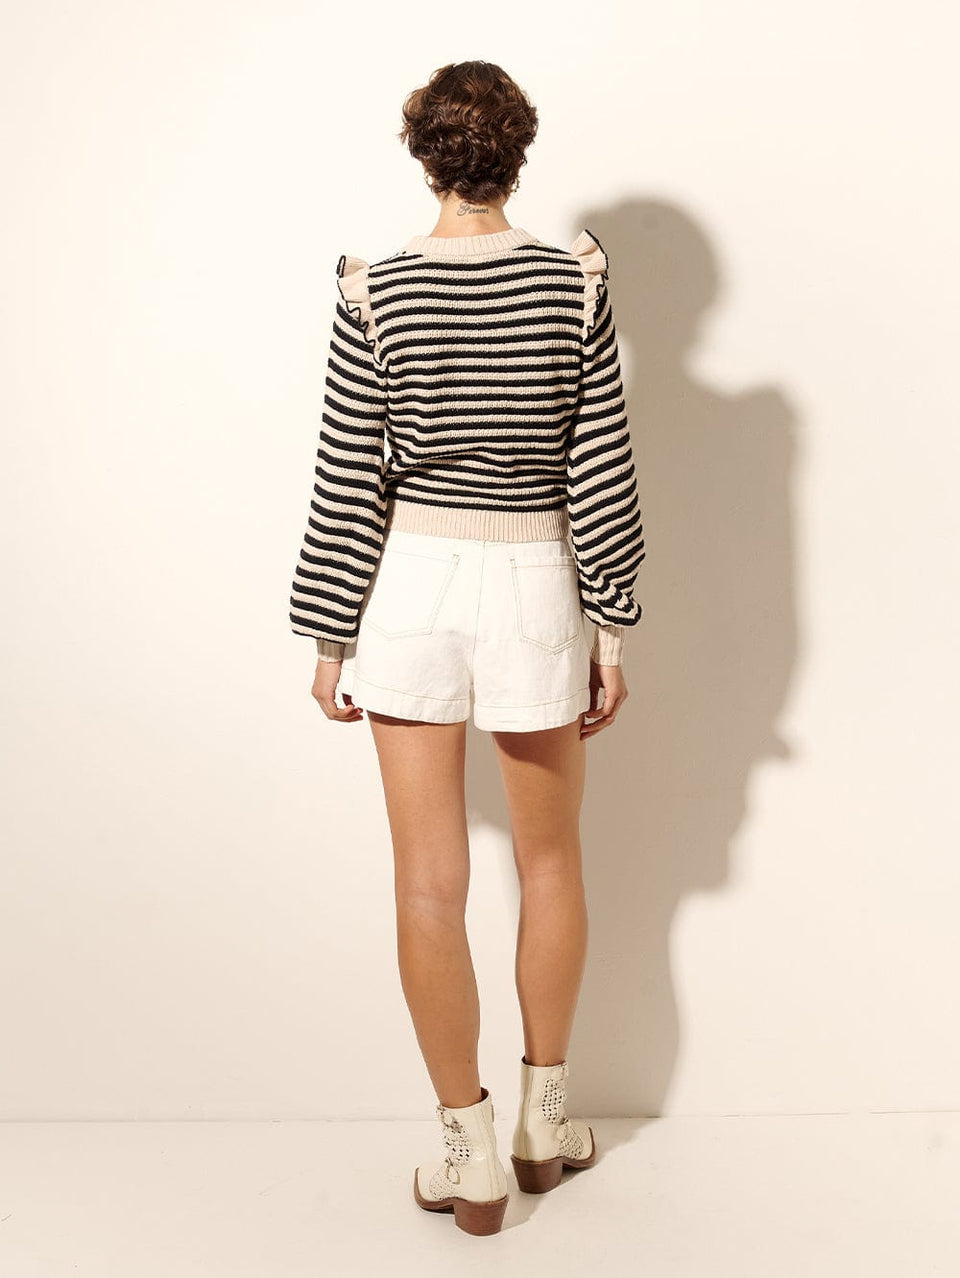 Anita Knit Top KIVARI | Model wears black and white striped knit jumper back view